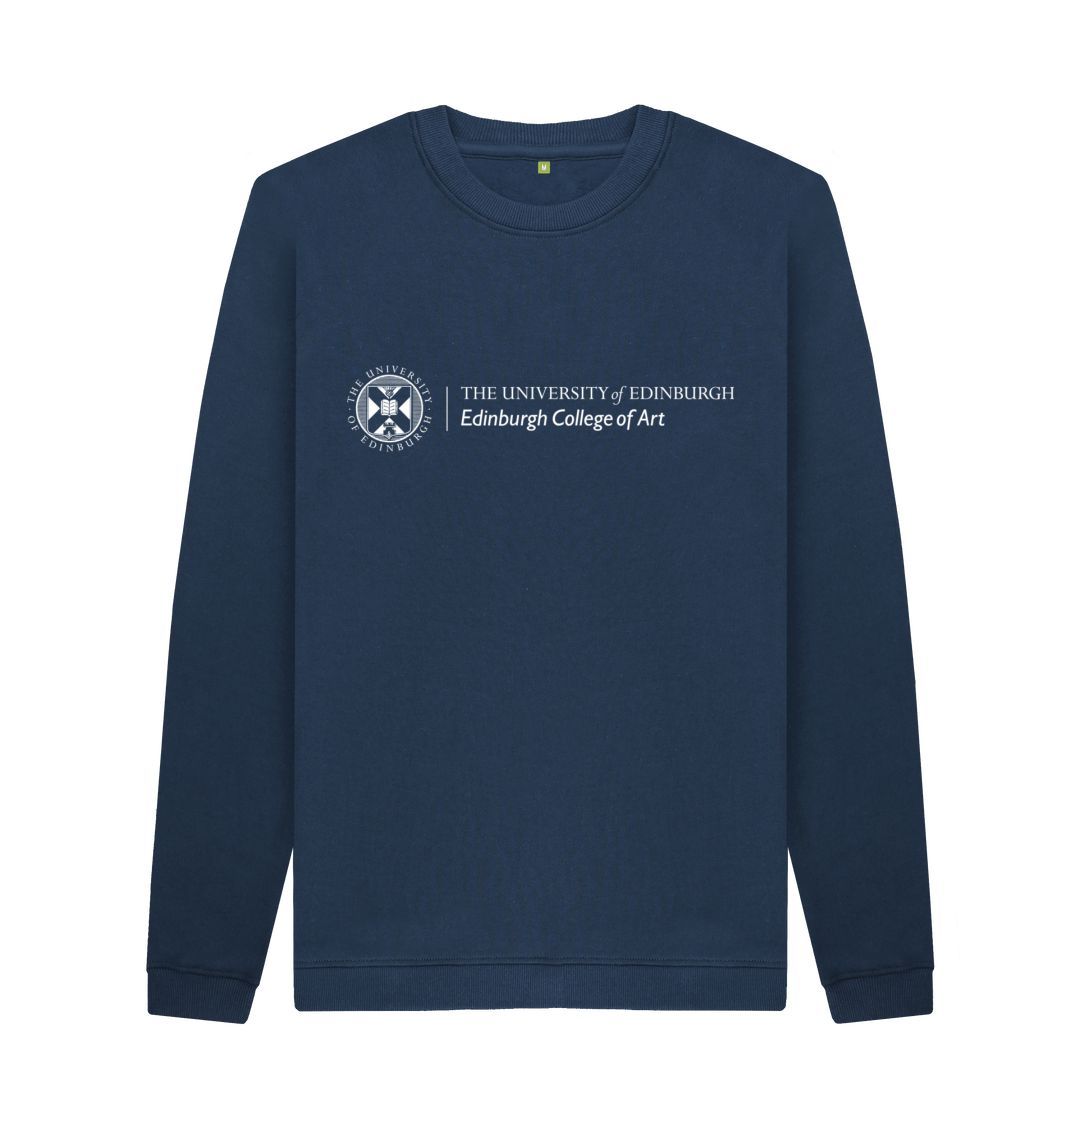 Navy Sweatshirt with white University crest and text that reads ' University of Edinburgh : Edinburgh College of Art '